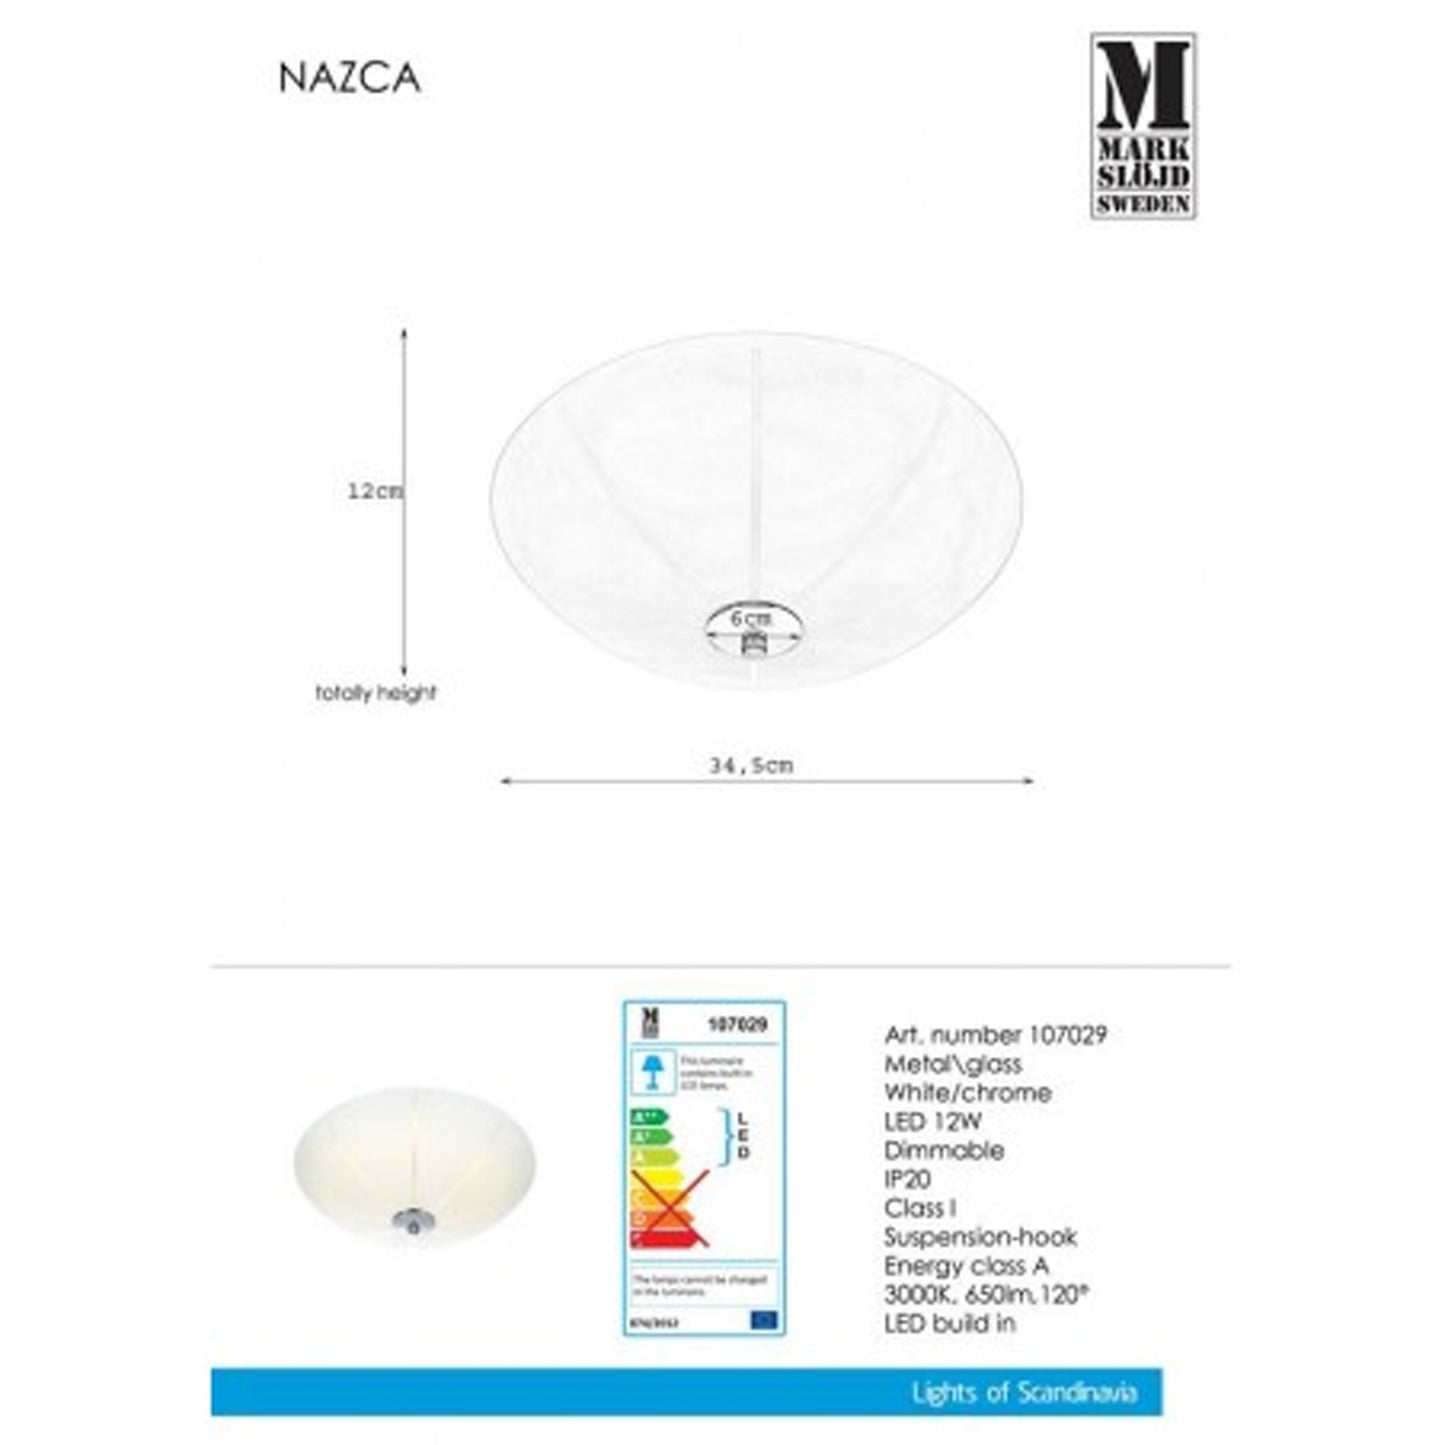 Nazca LED plafond Ø35cm hvit/krom